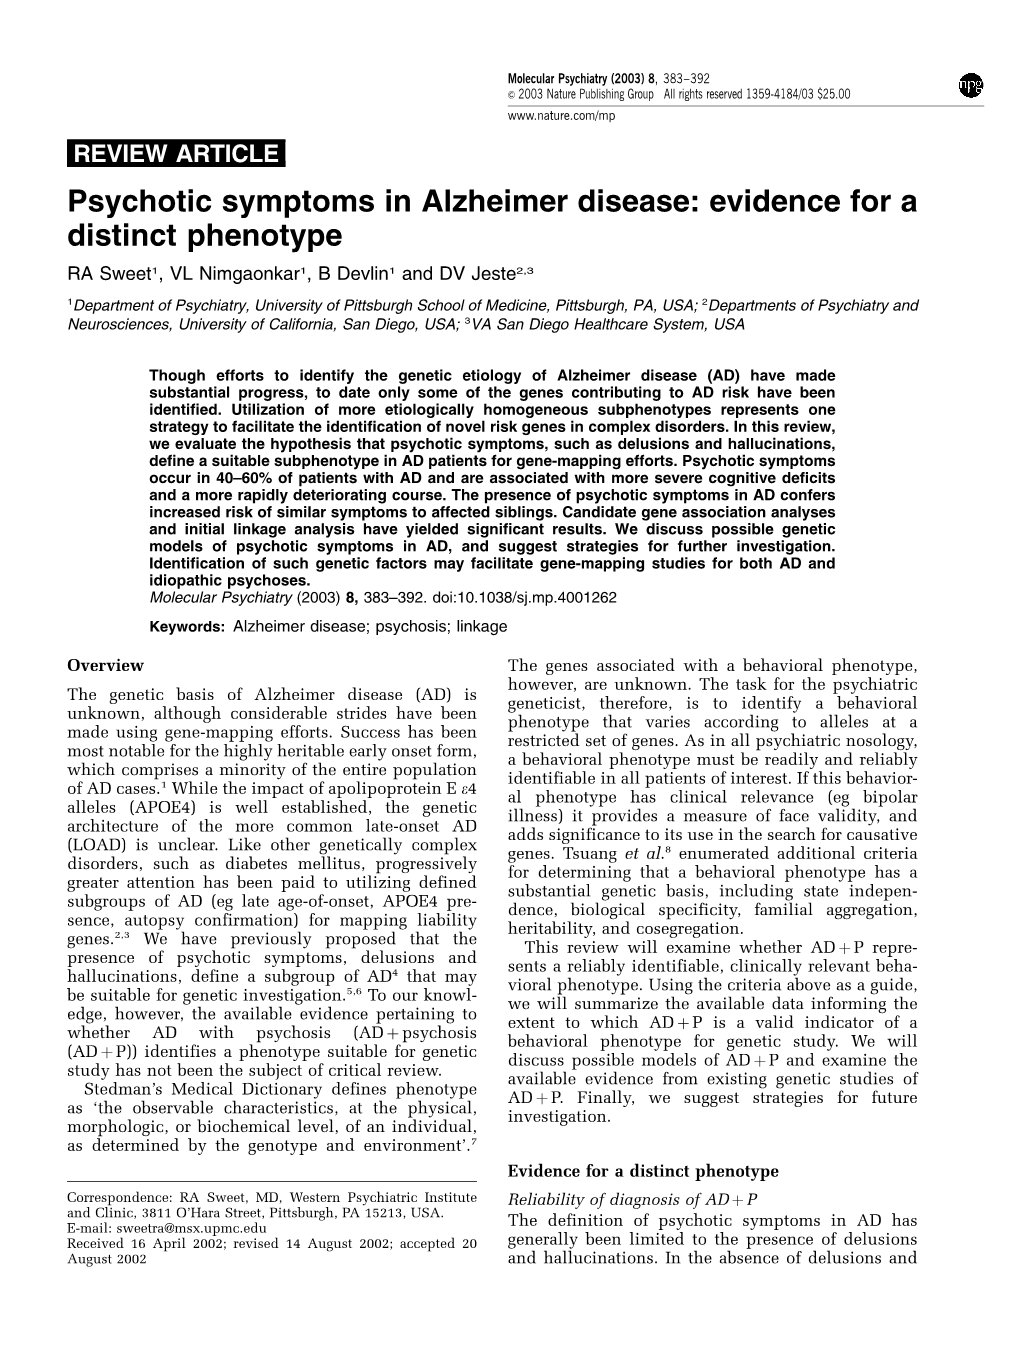 Psychotic Symptoms in Alzheimer Disease